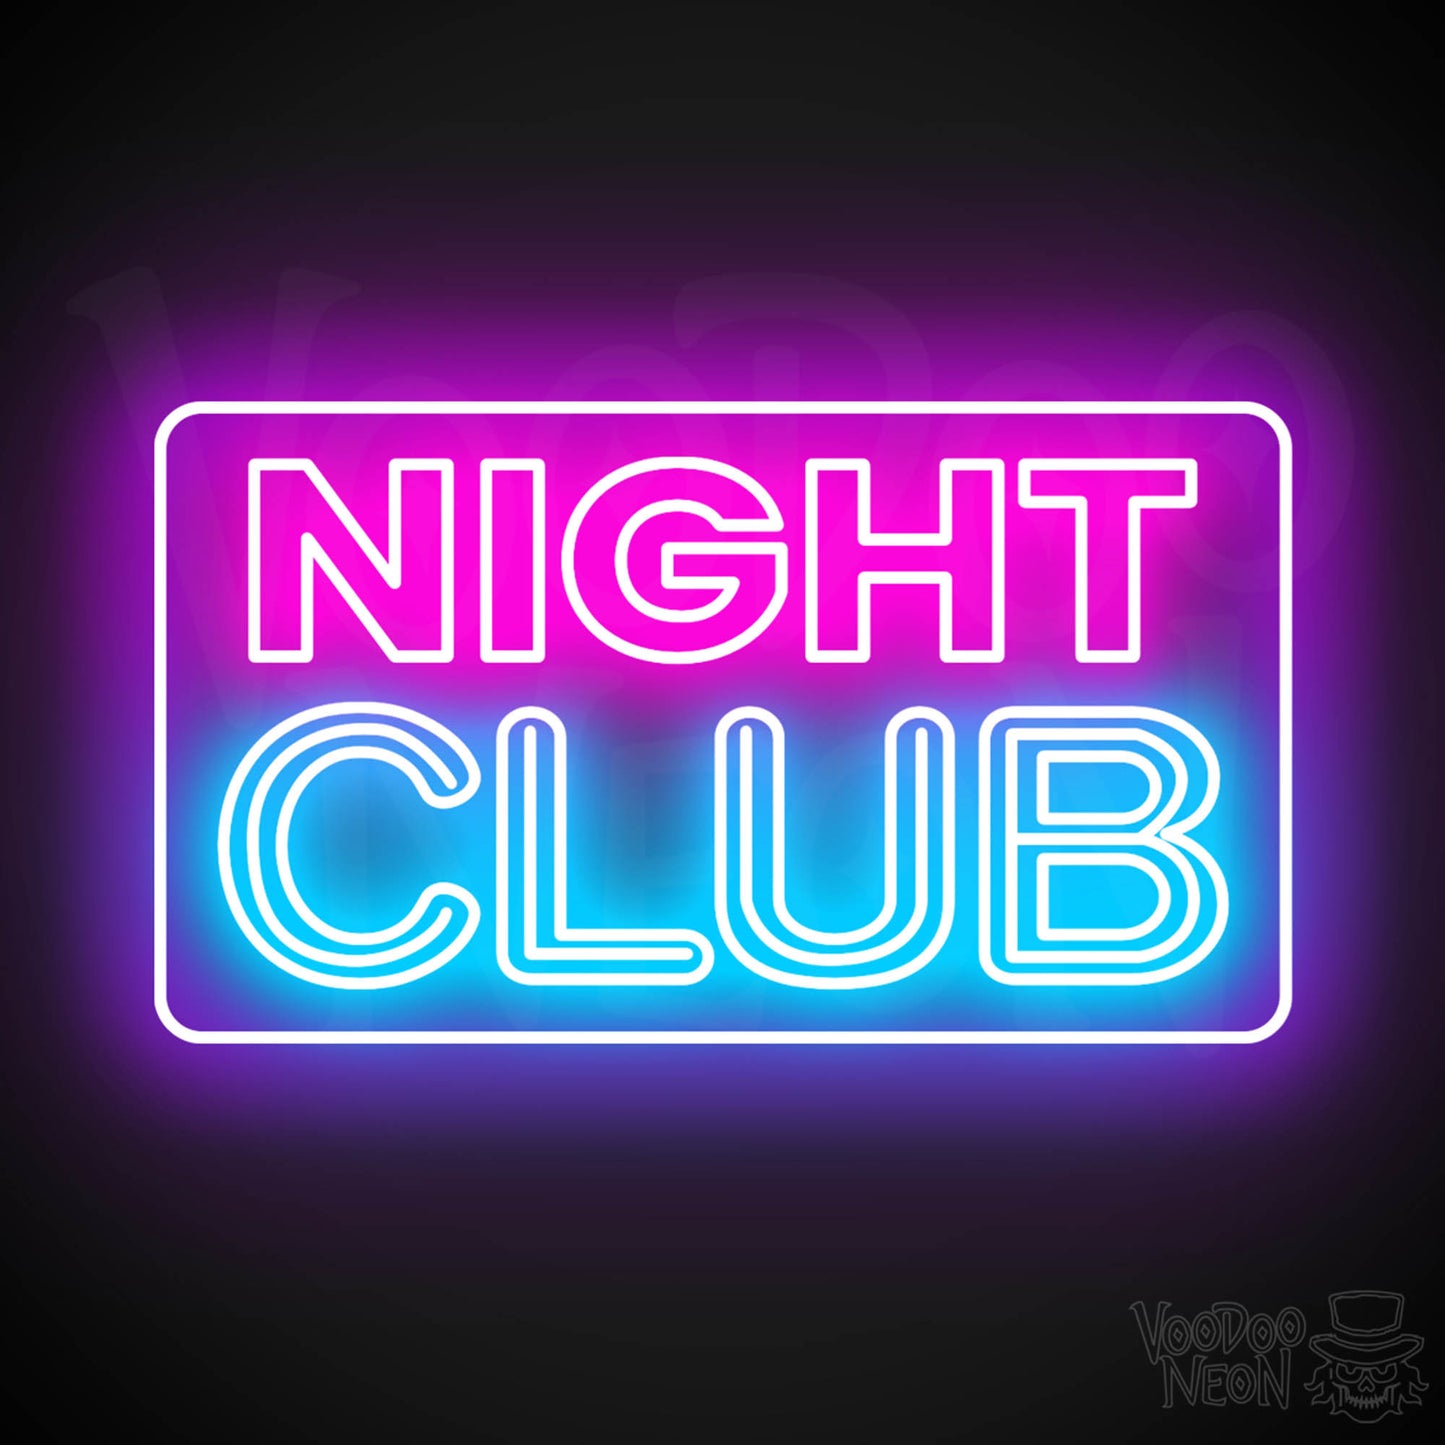 Night Club LED Neon - Multi-Color